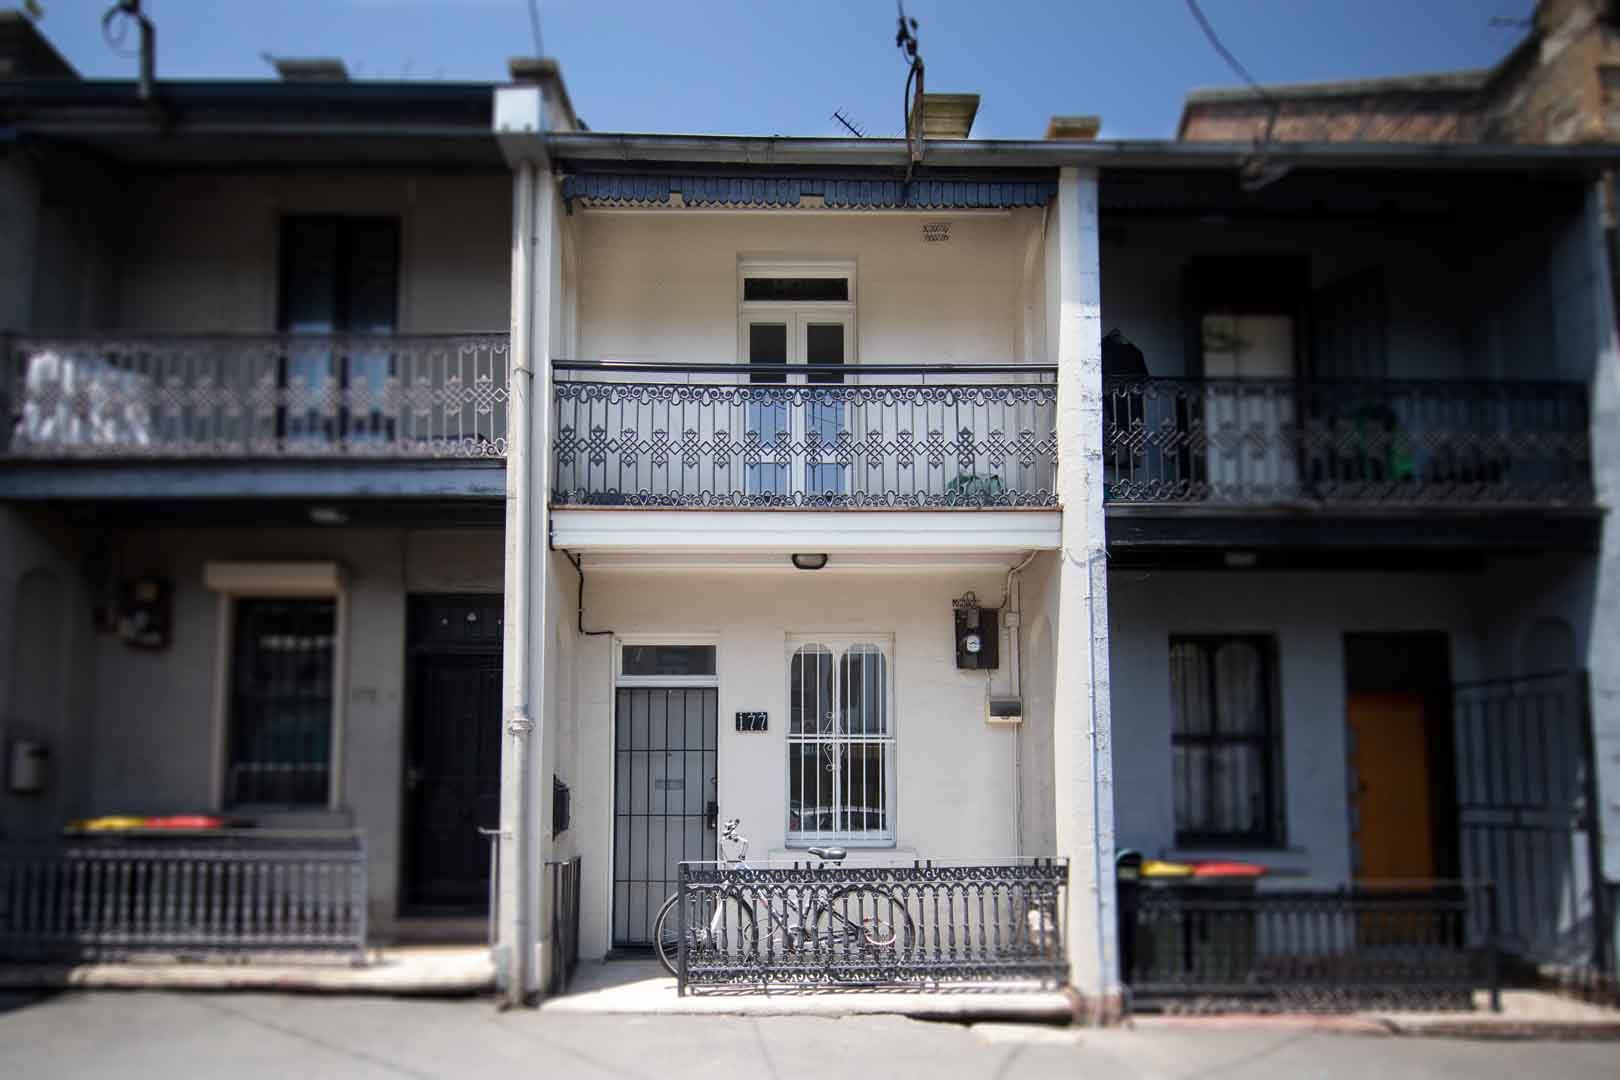 2 bedrooms House in 177 Regent Street REDFERN NSW, 2016